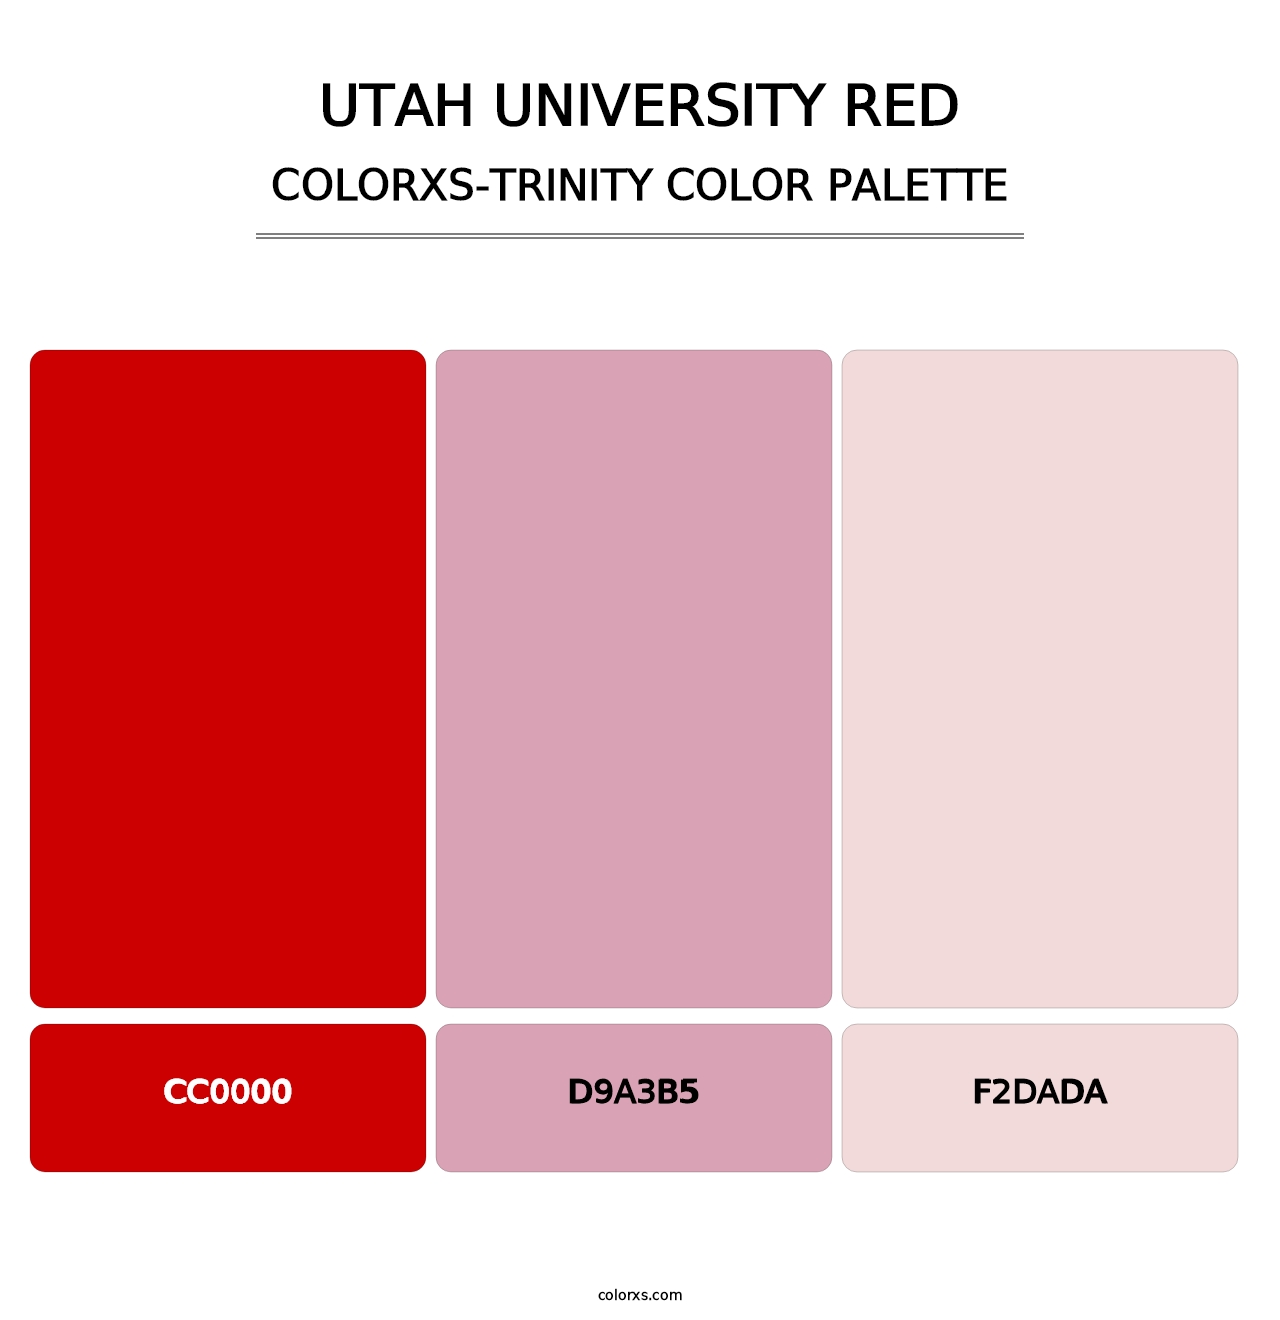 Utah University Red - Colorxs Trinity Palette